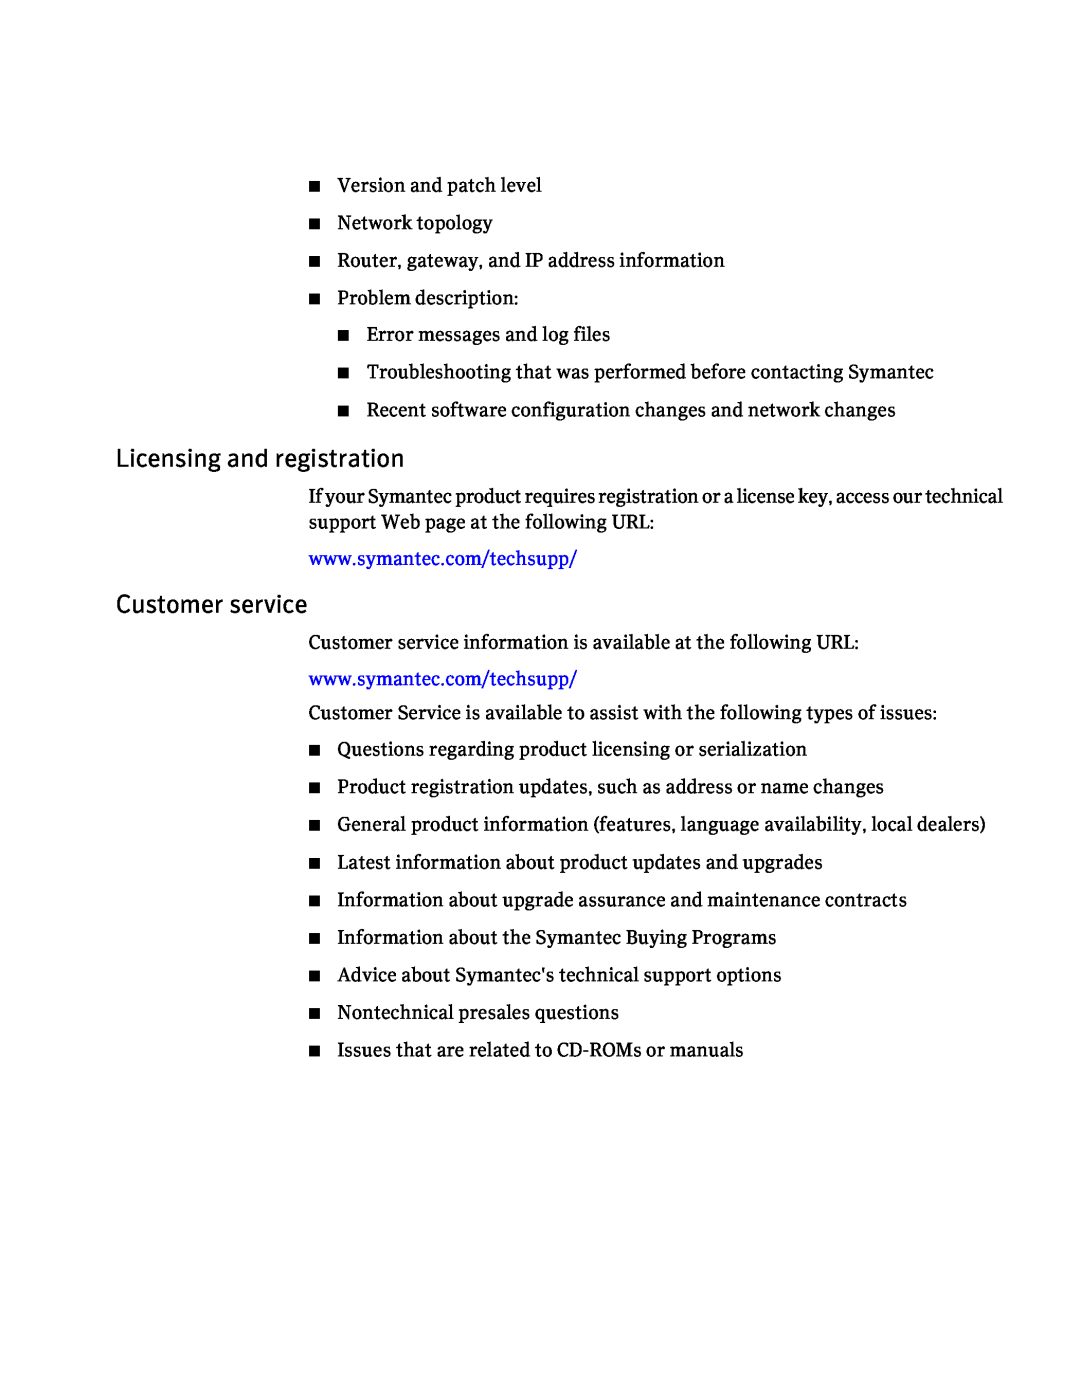 Symantec 5.1 manual Licensing and registration, Customer service 